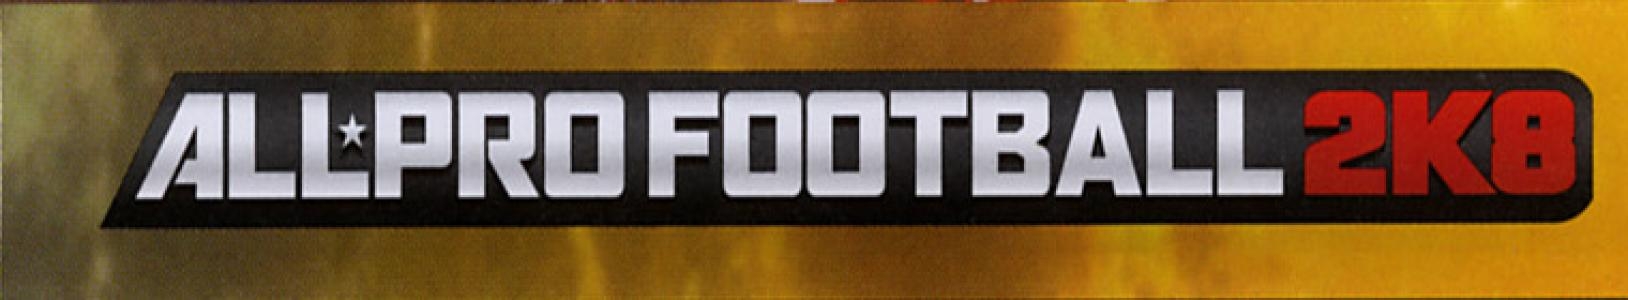 All-Pro Football 2K8 banner